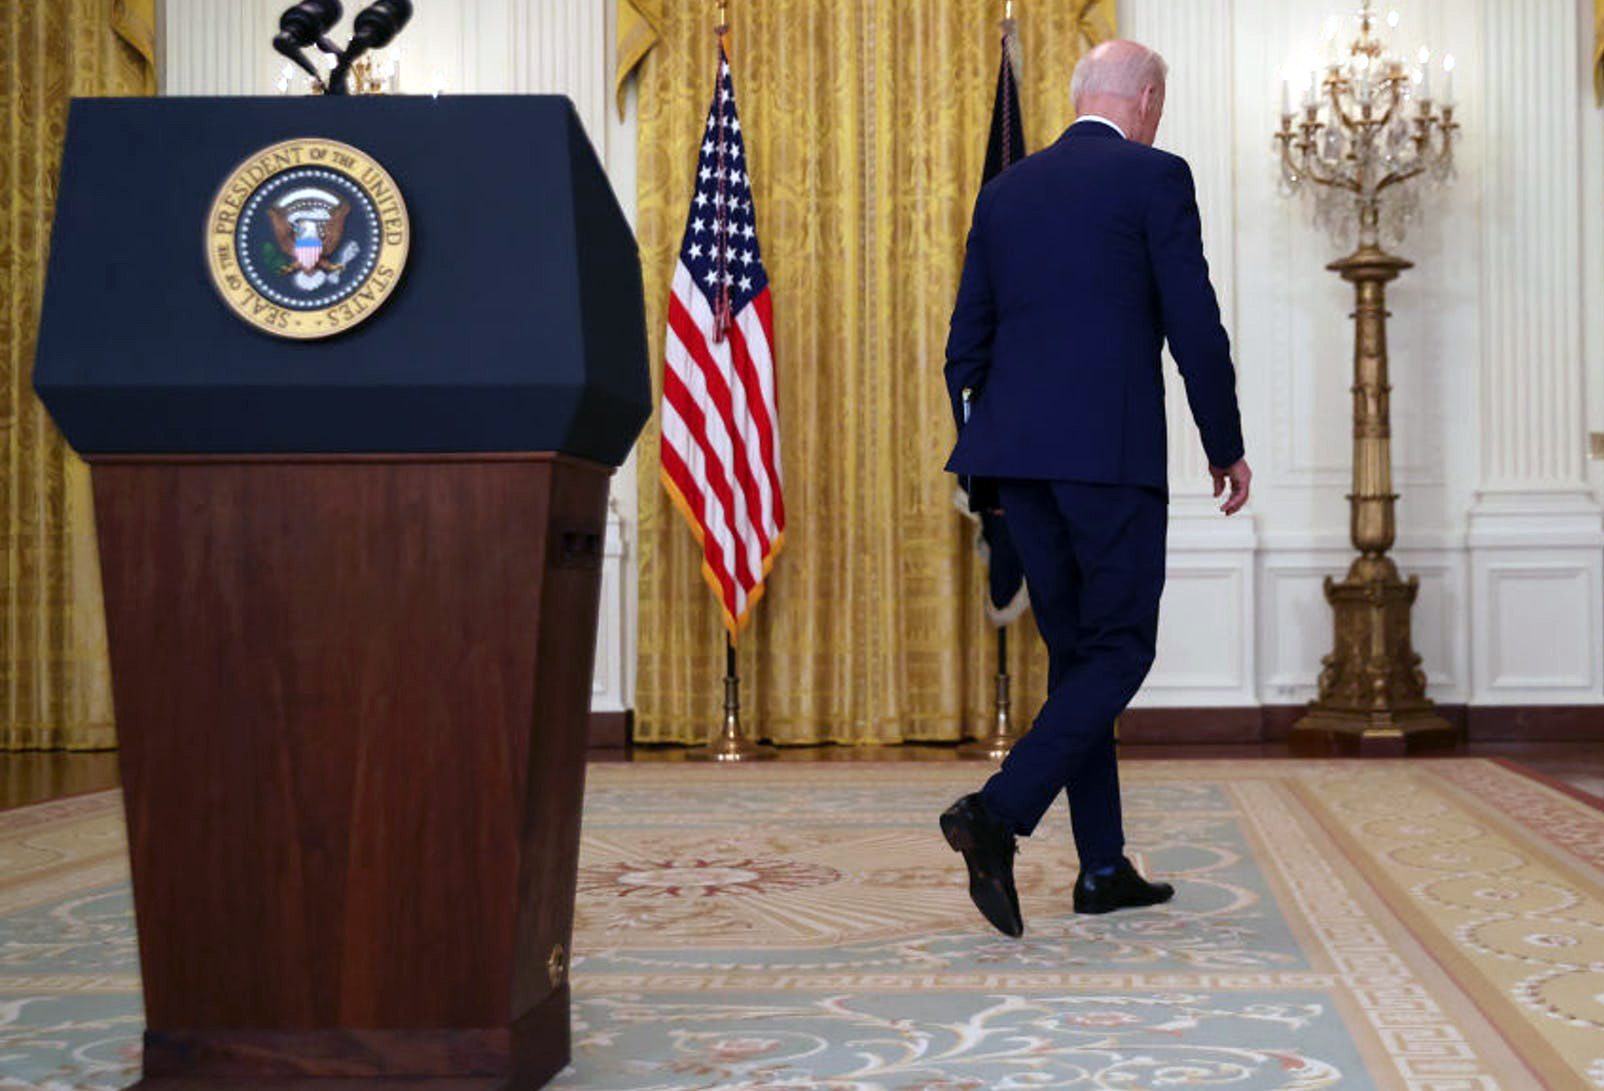 Biden walks away from lectern